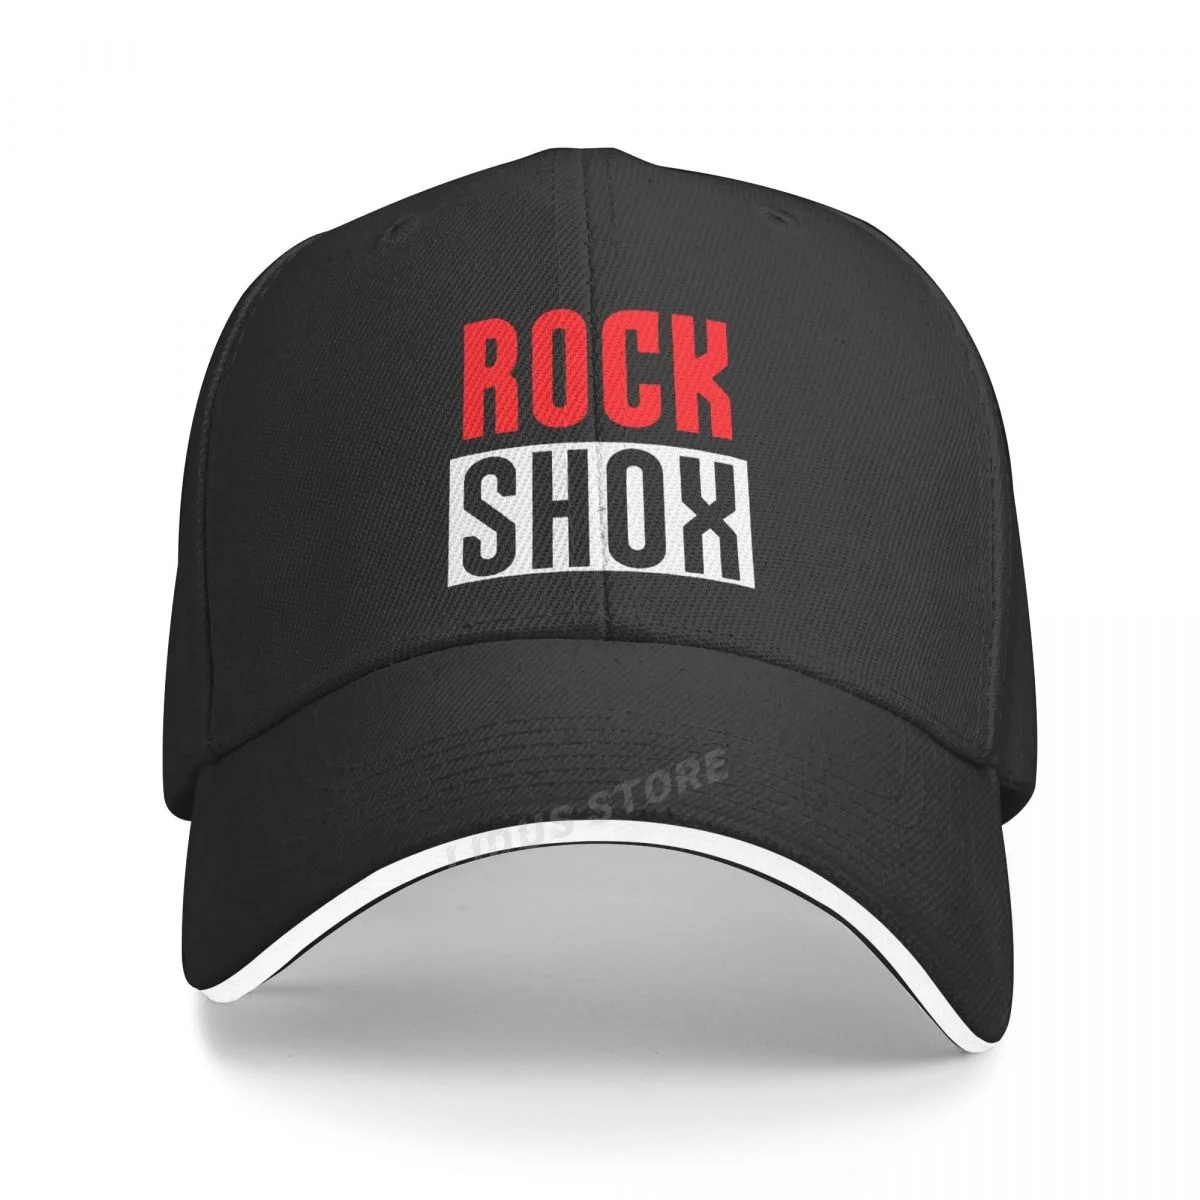 Rockshox Rock Shox Baseball Caps Adult Hat Adjustable Fashion Outdoor Caps